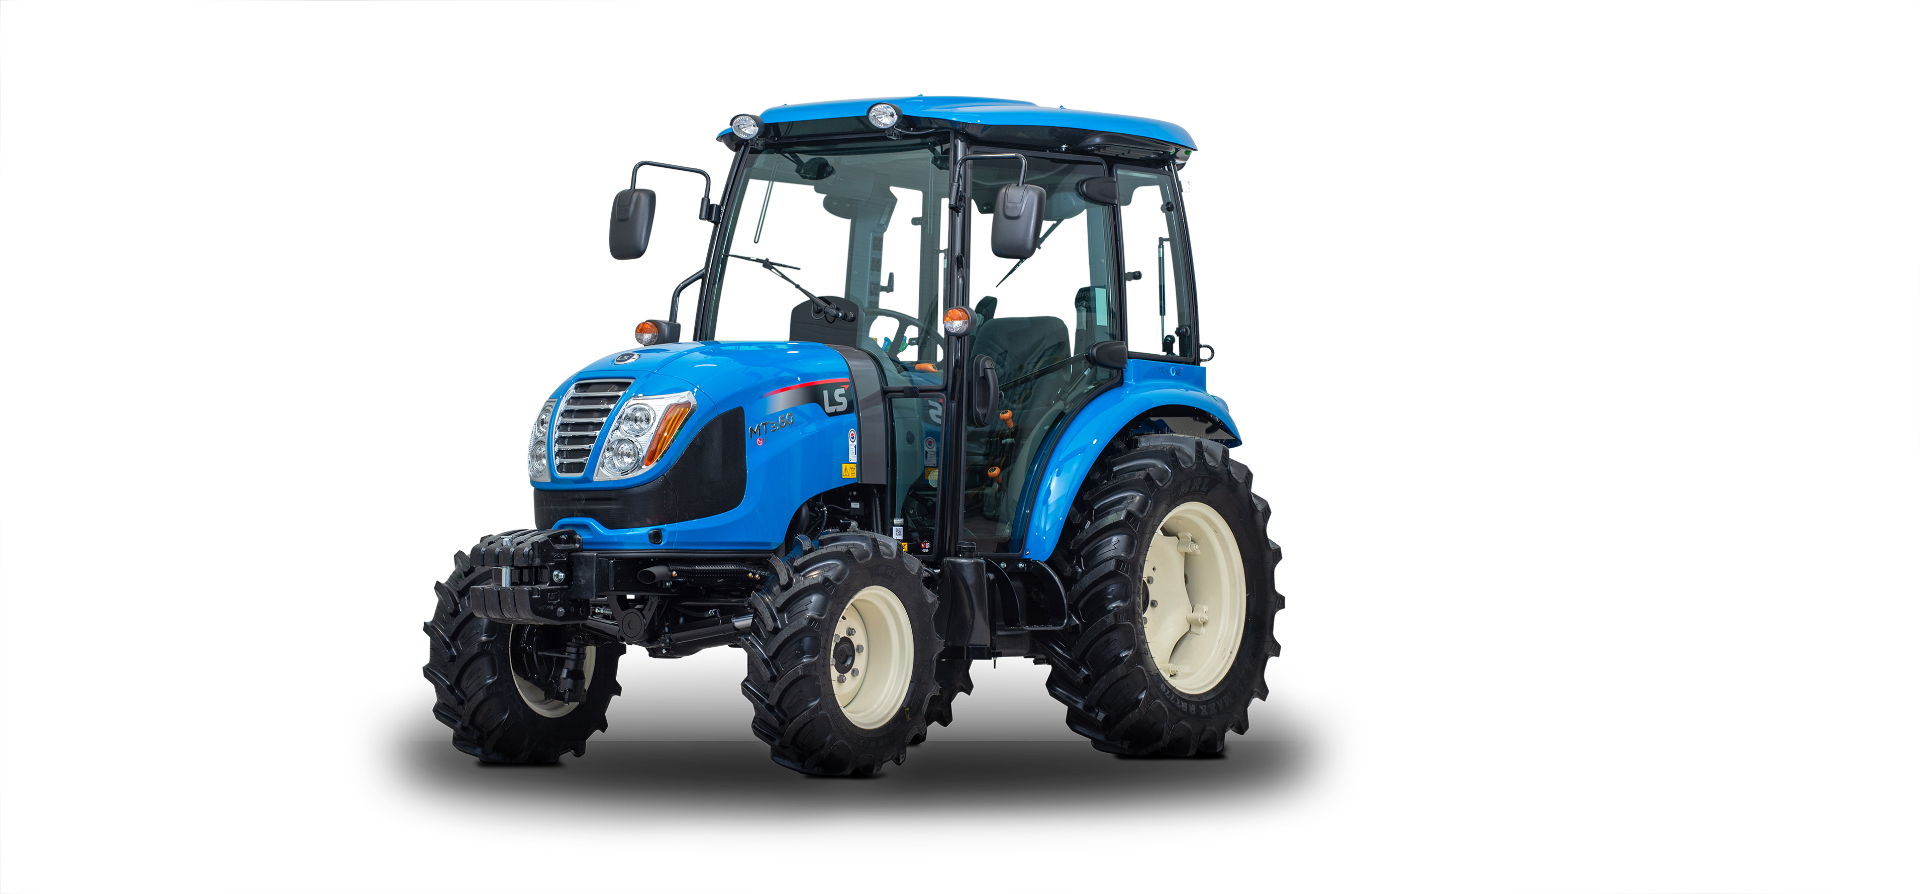 Dostopen Ls traktor